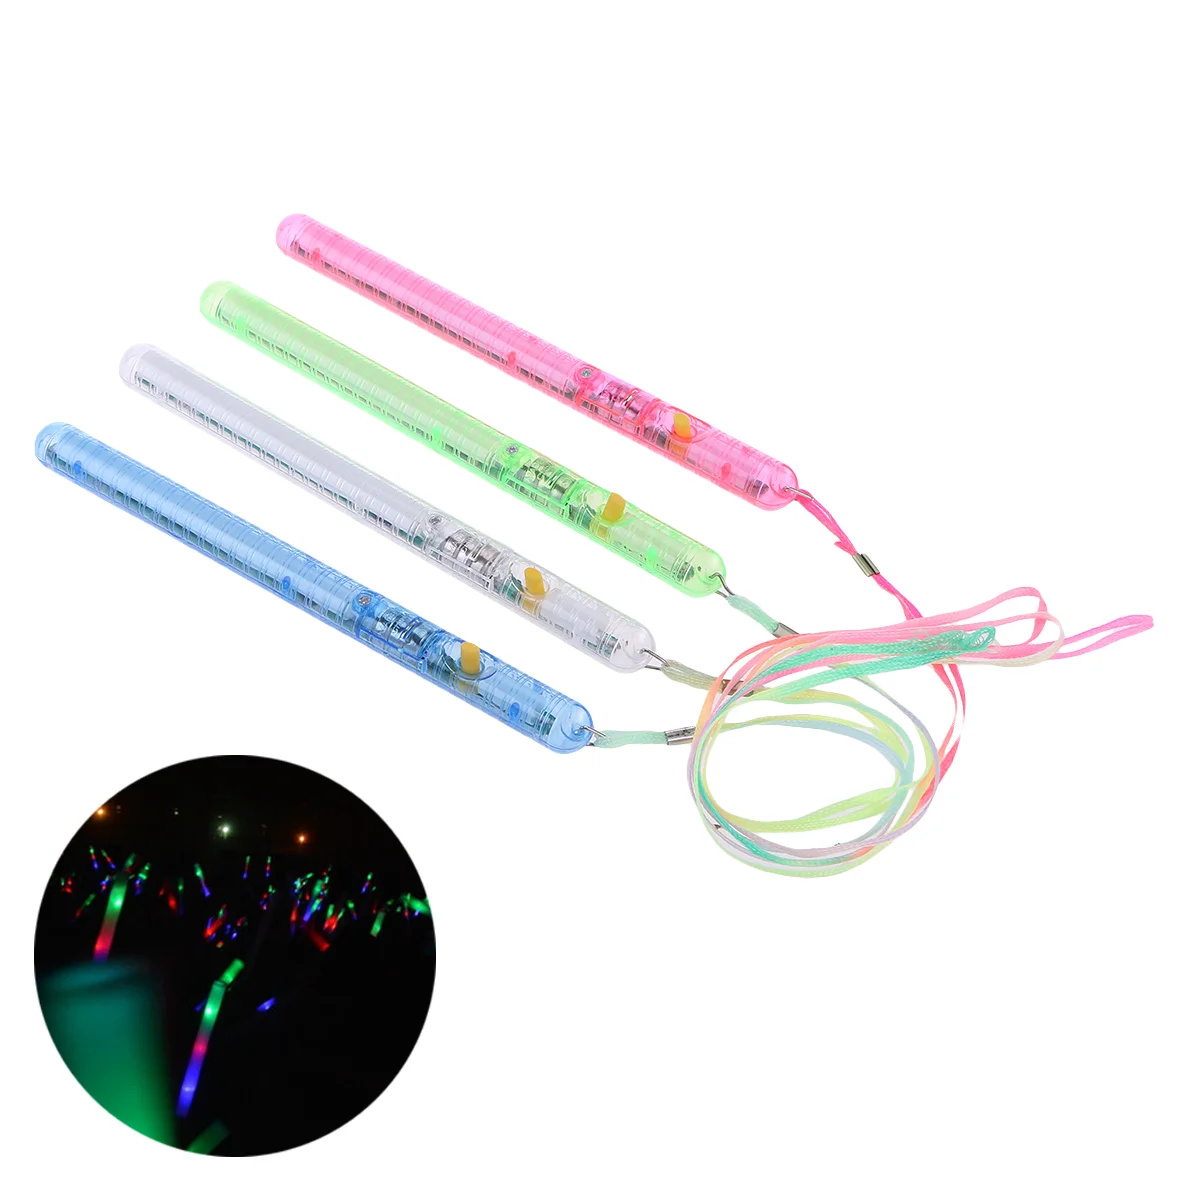 

Light Up Multi Color LED Foam Stick Wands Rally Rave Cheer Batons Party Flashing Glow Stick Light Sticks Sale Hot